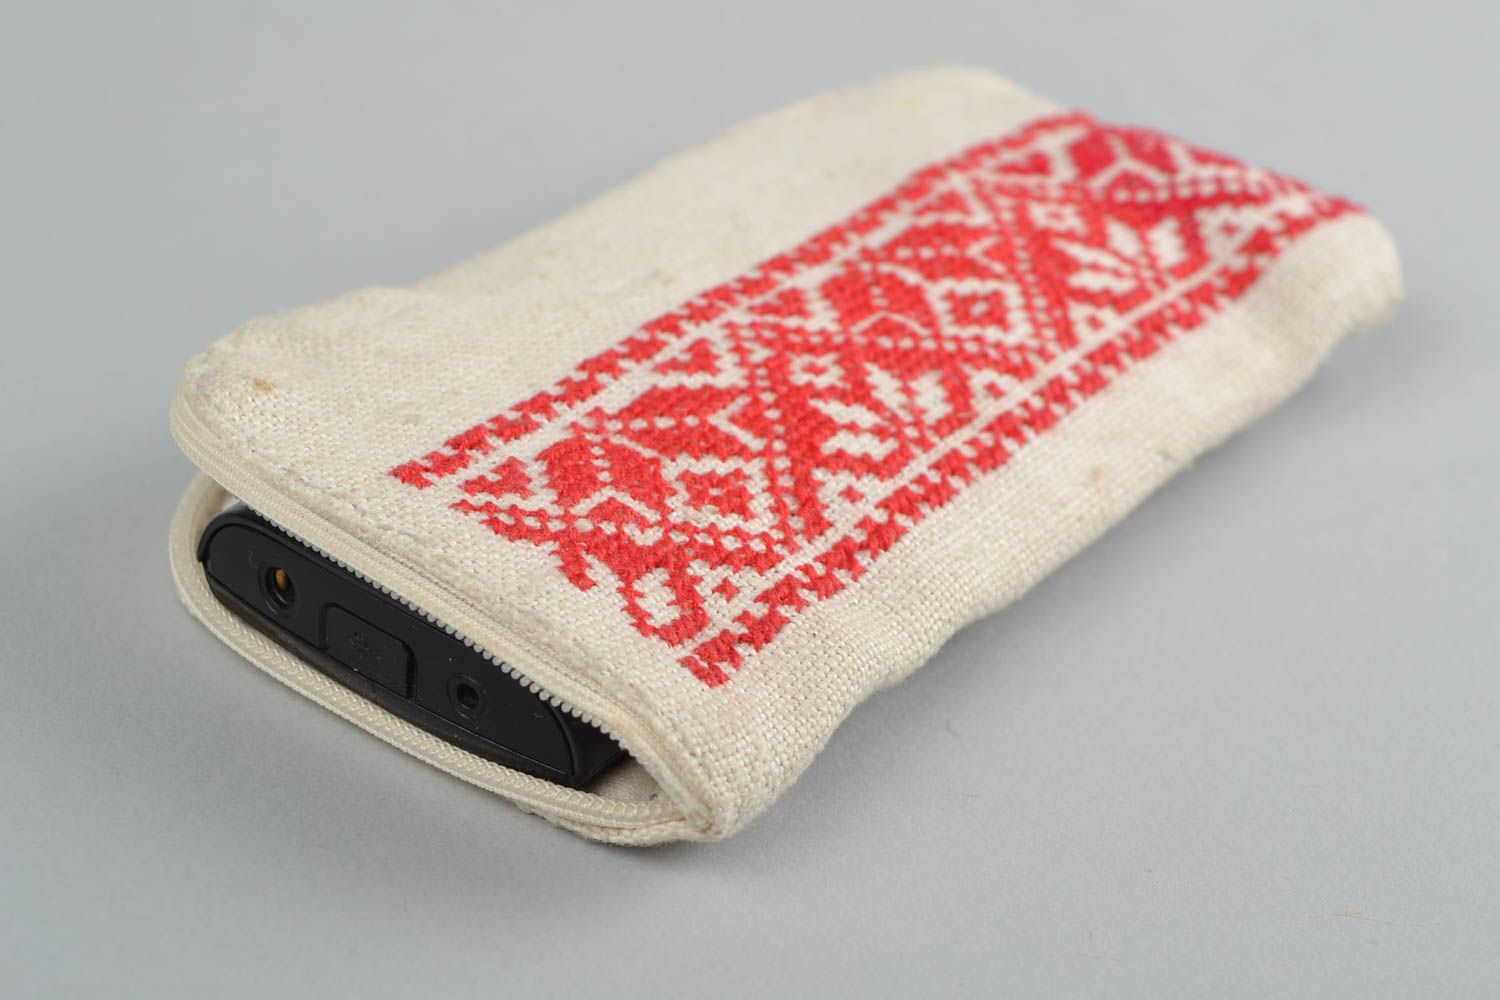 Handmade designer hemp fabric phone case with red cross stitch embroidery photo 3